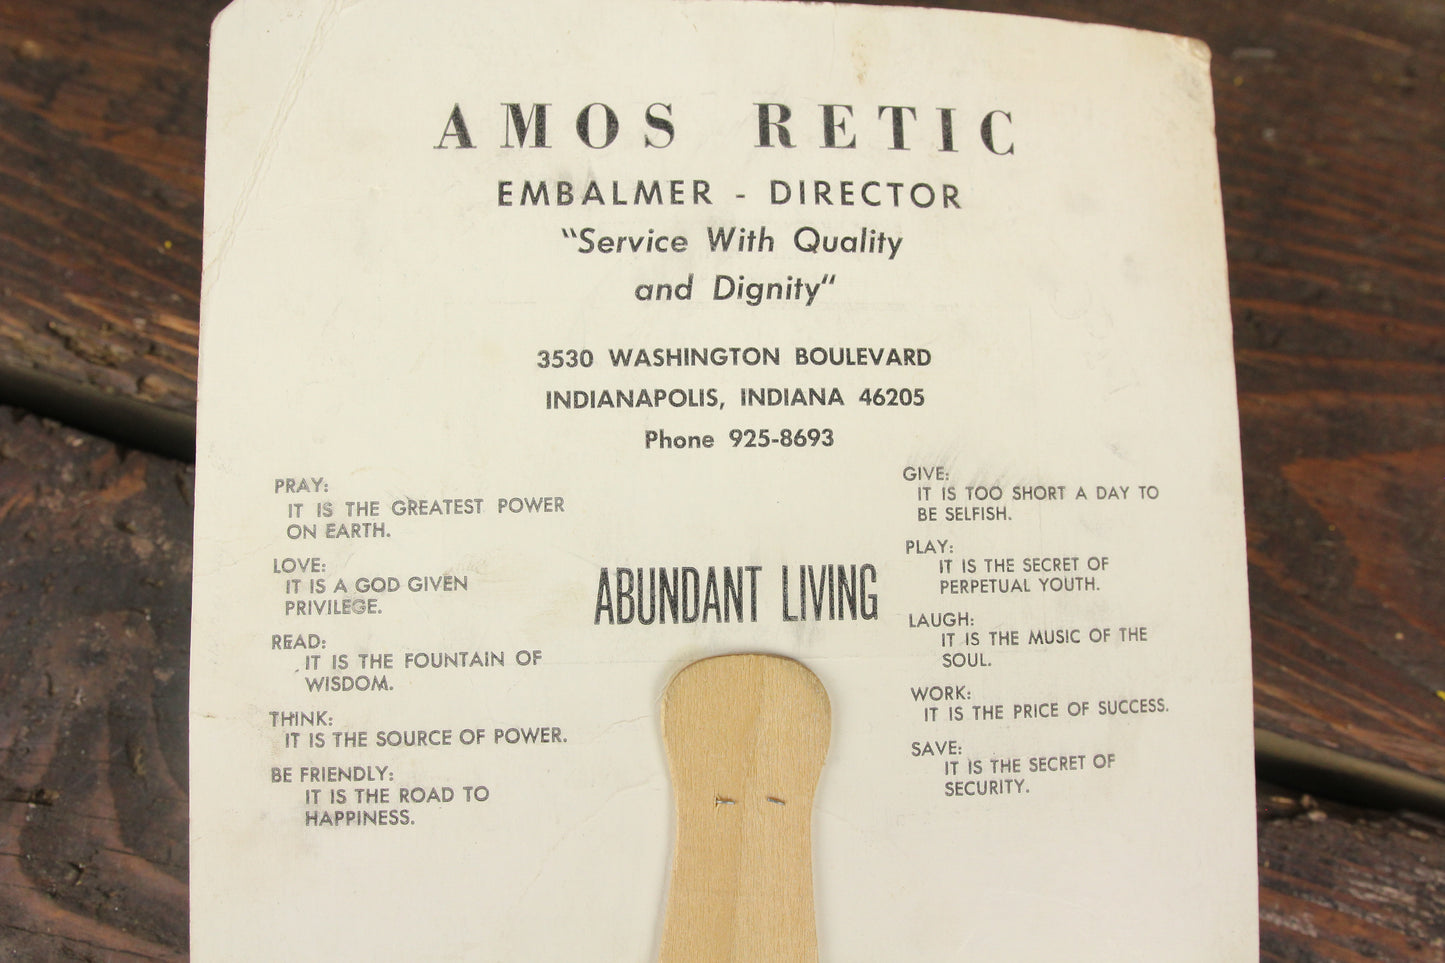 McCane Retic Mortuary Inc. & Amos Retic, Embalmer, Indianapolis, IN Advertising Church Fan